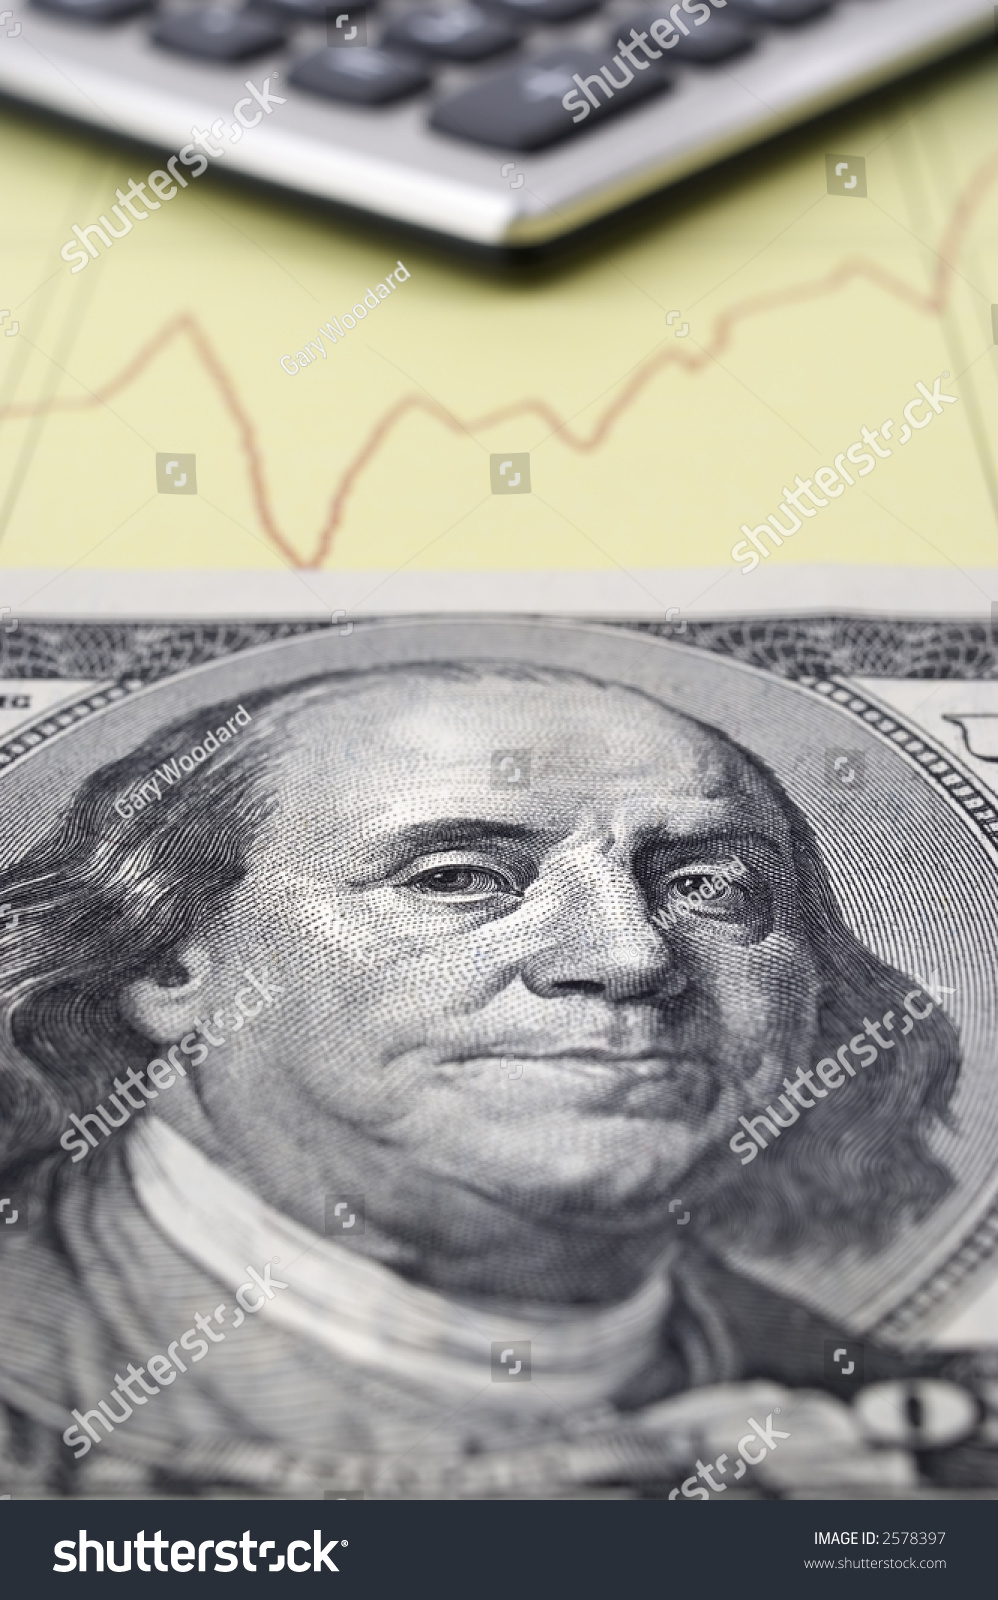 closeup-image-one-hundred-dollar-bill-stock-photo-2578397-shutterstock